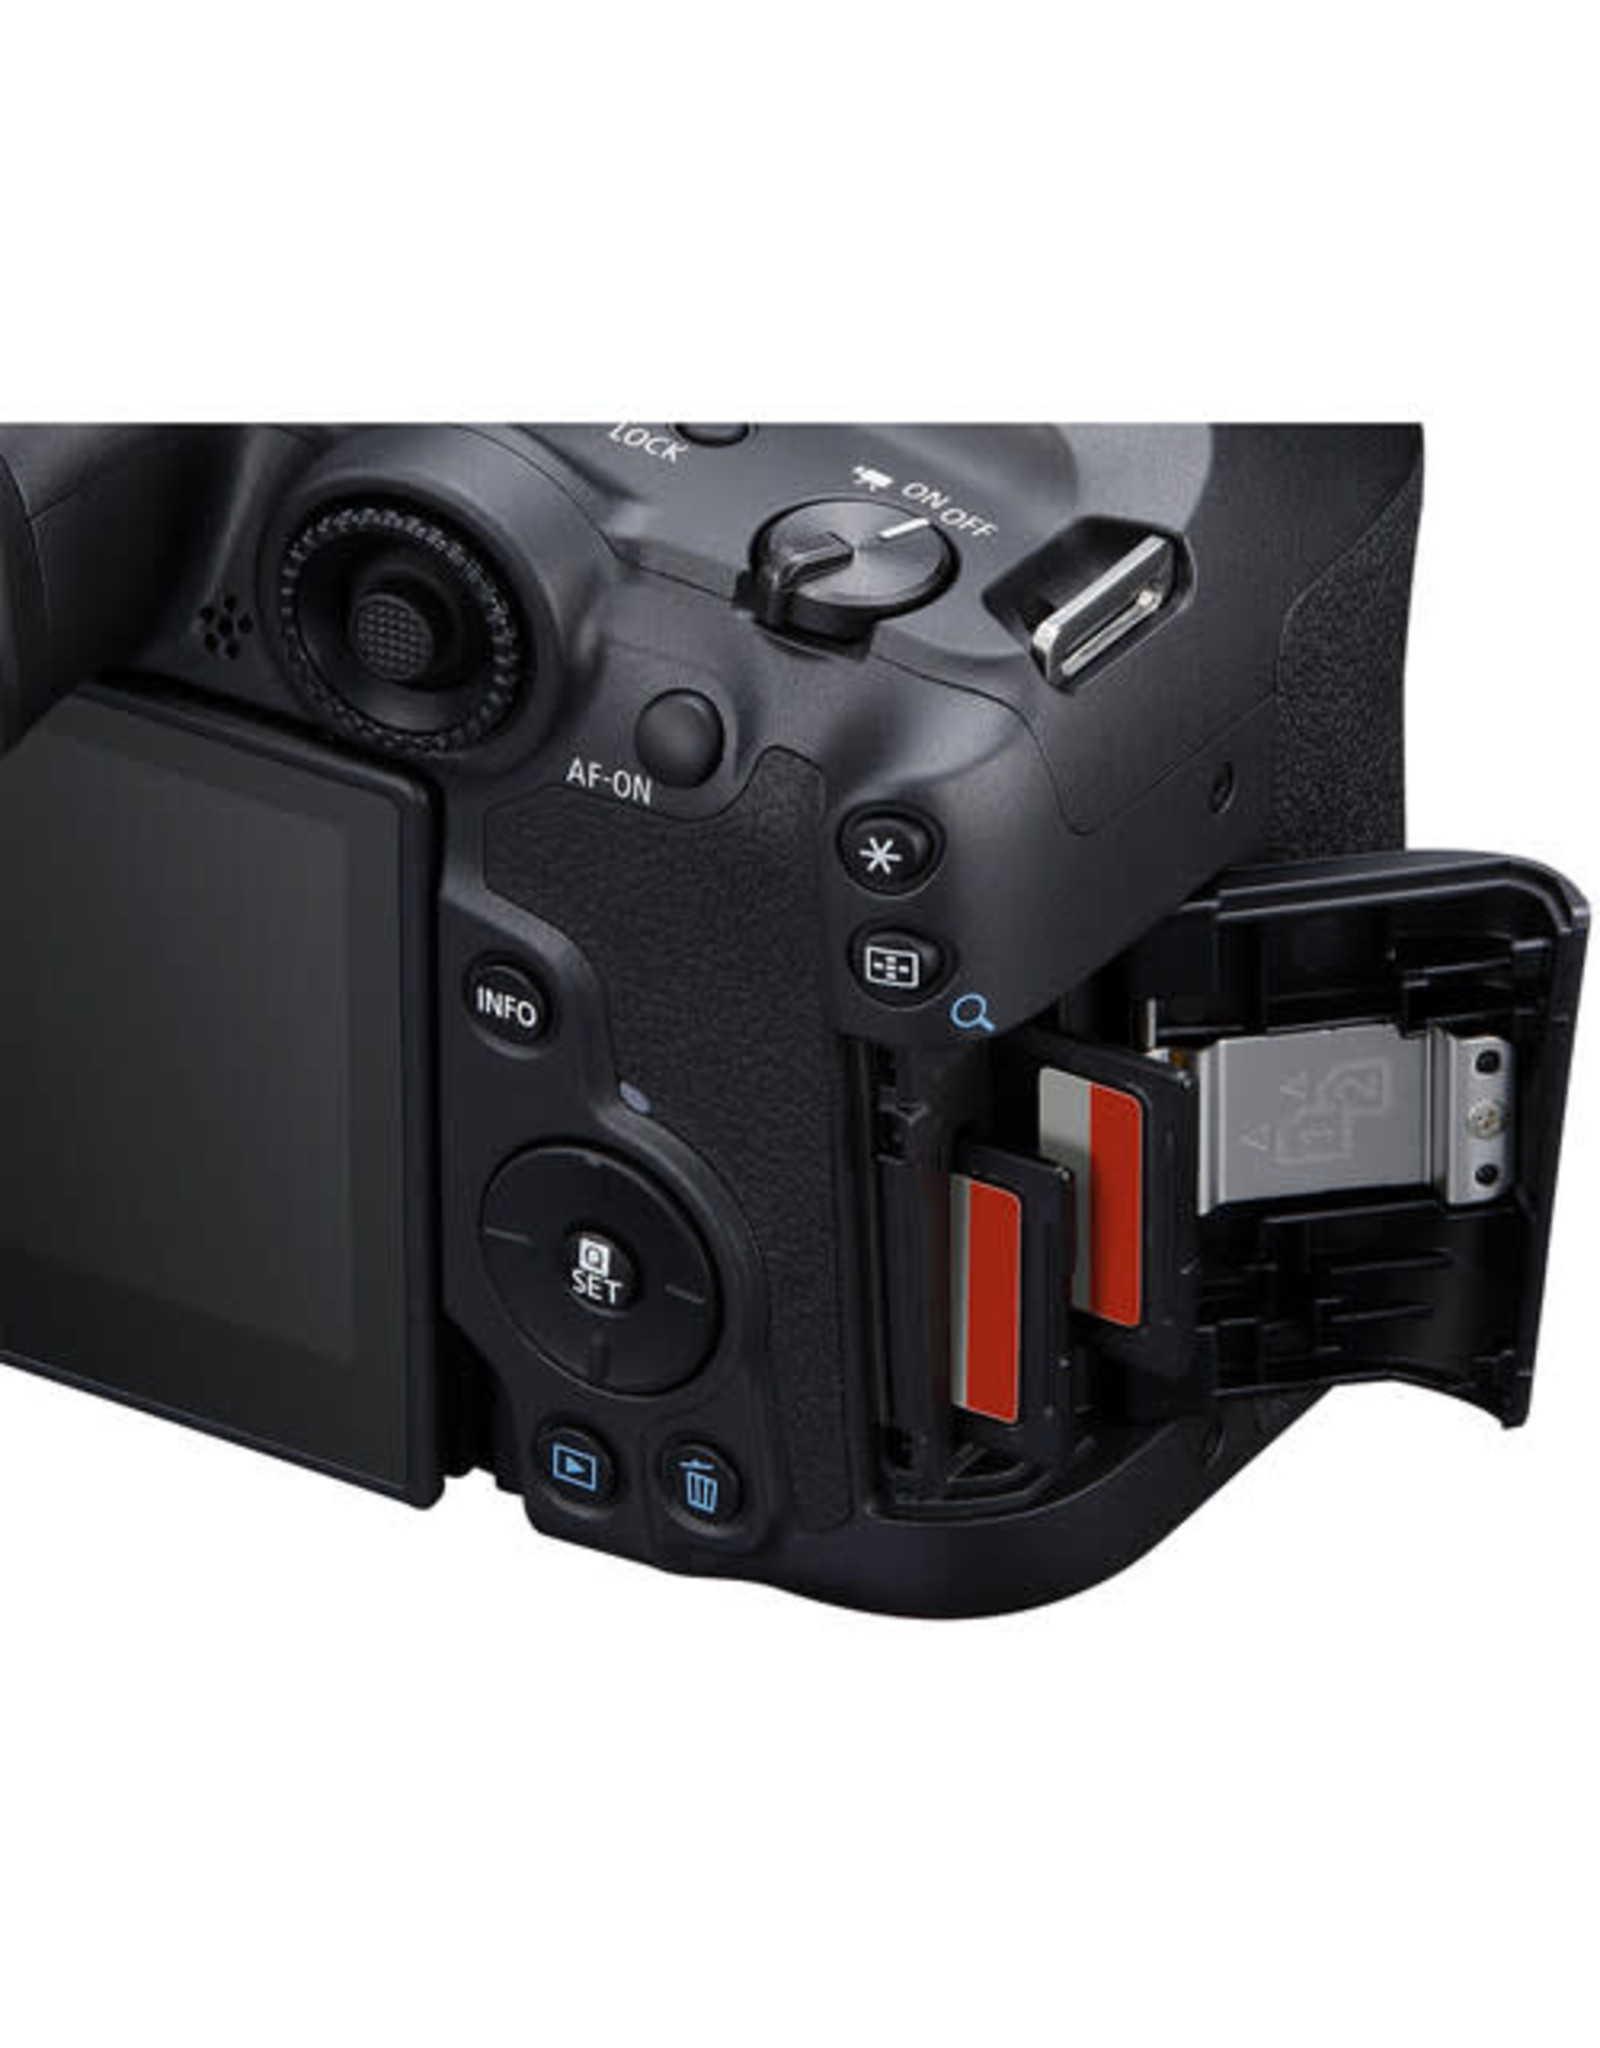 Canon Canon EOS R7 Mirrorless Camera Body Only